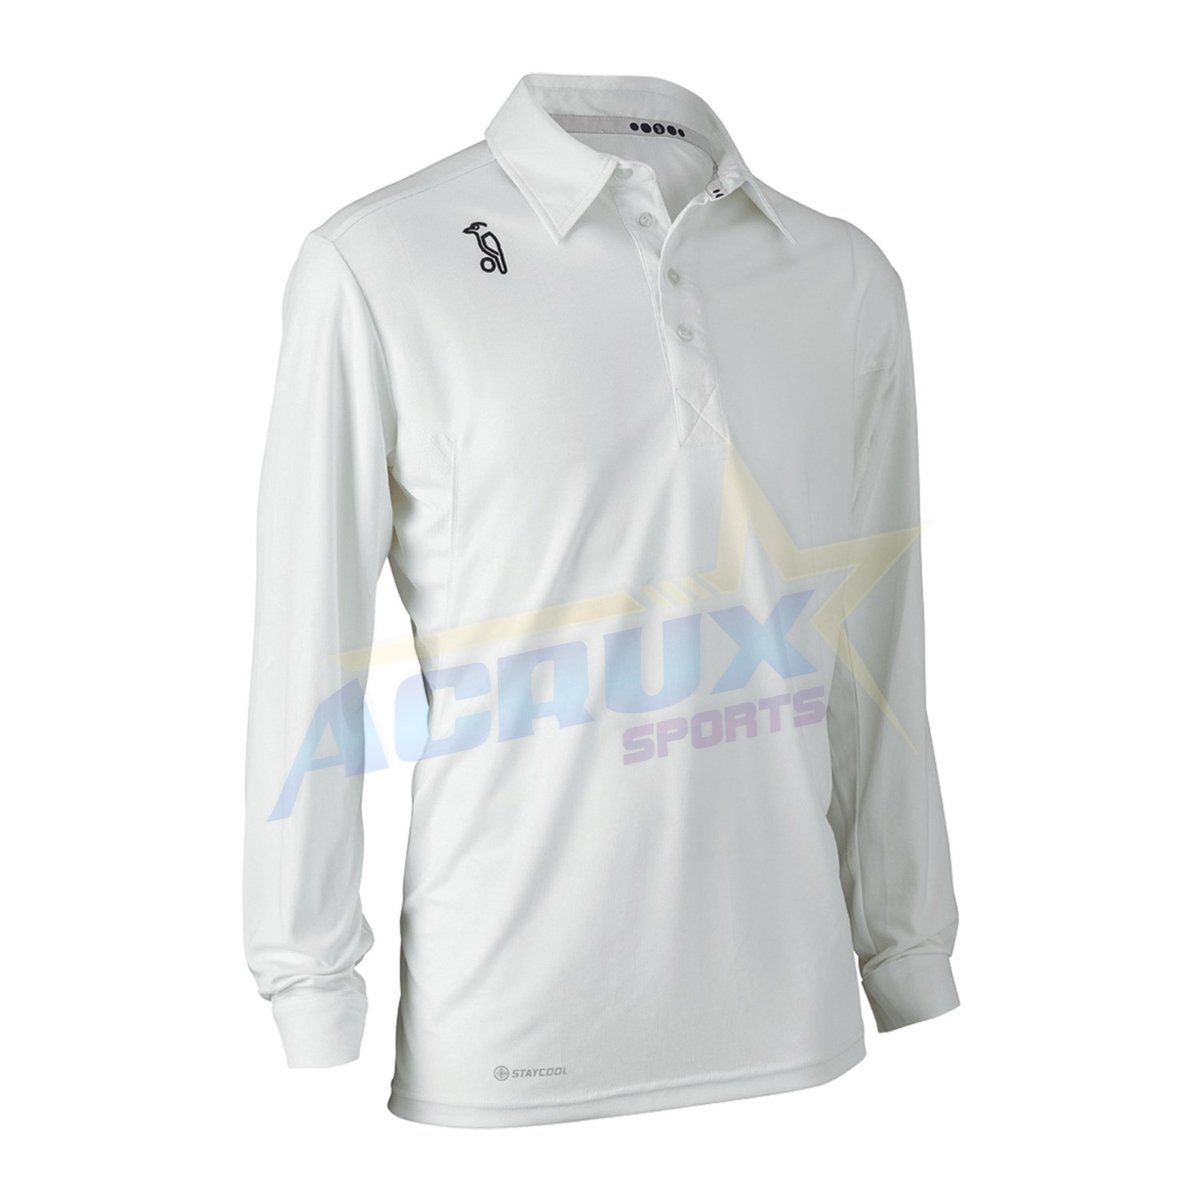 Kookaburra Pro Active Full Sleeve Cricket Shirt White.